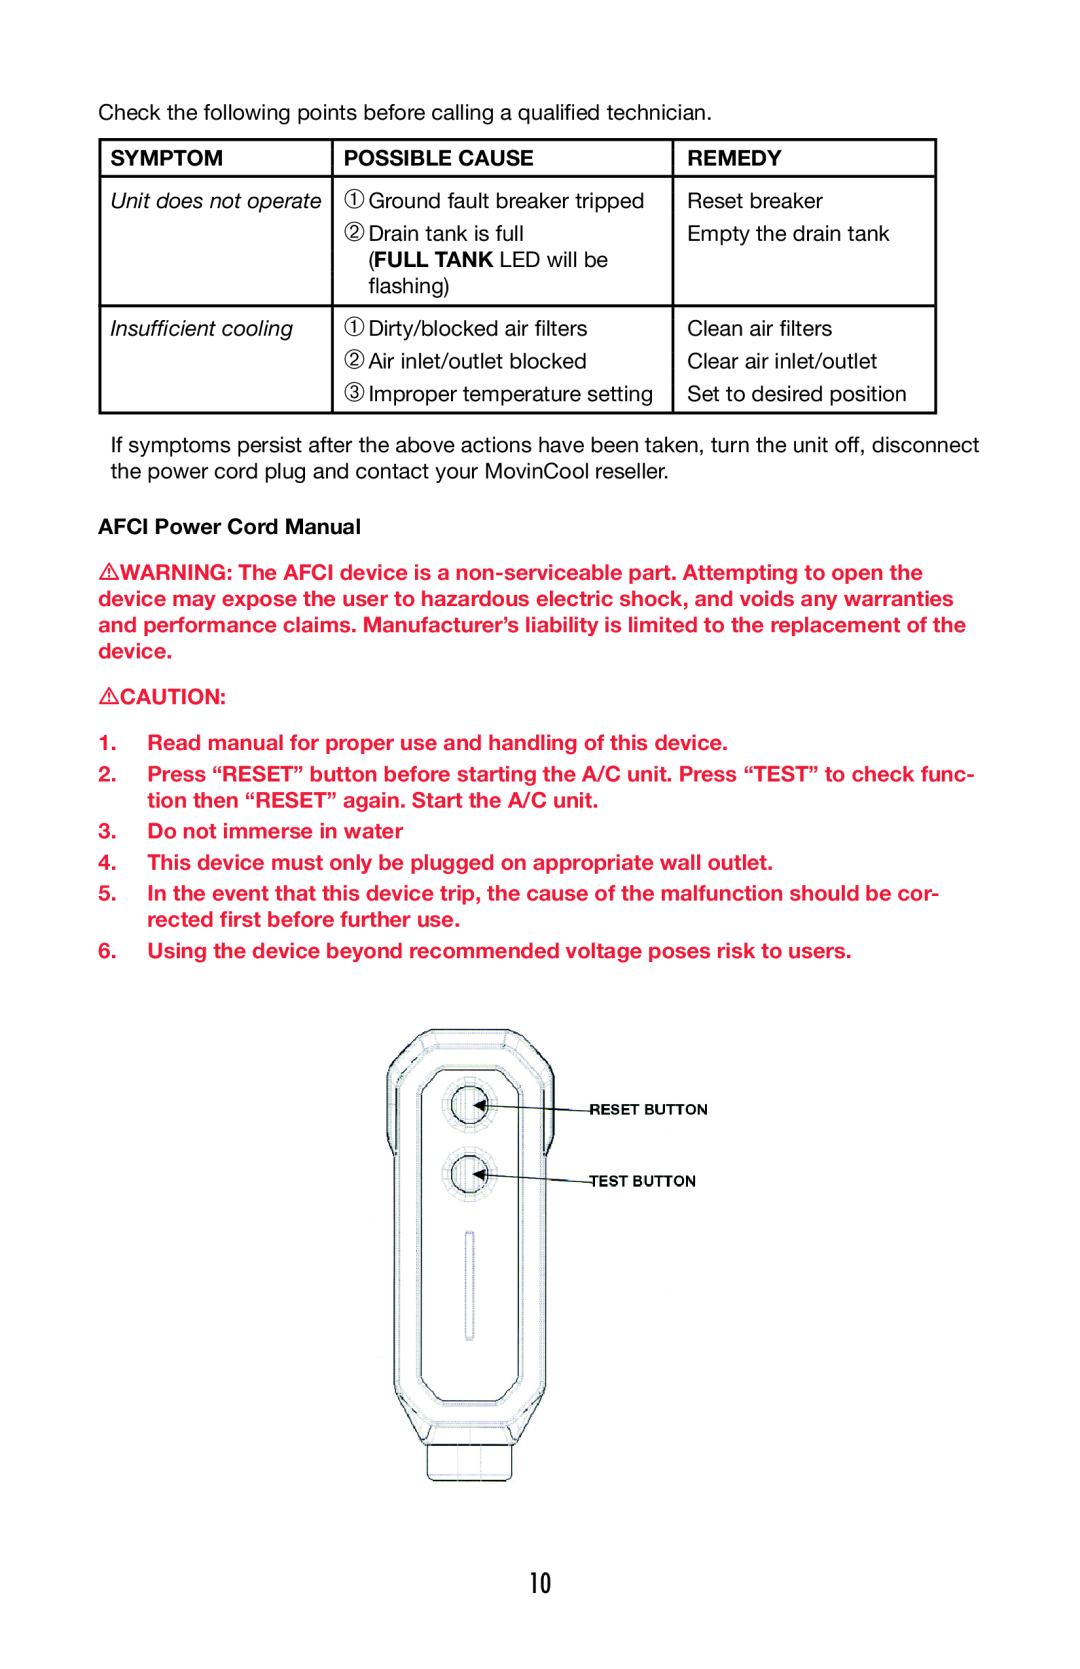 Denso 36 operation manual AFCI Power Cord Manual 